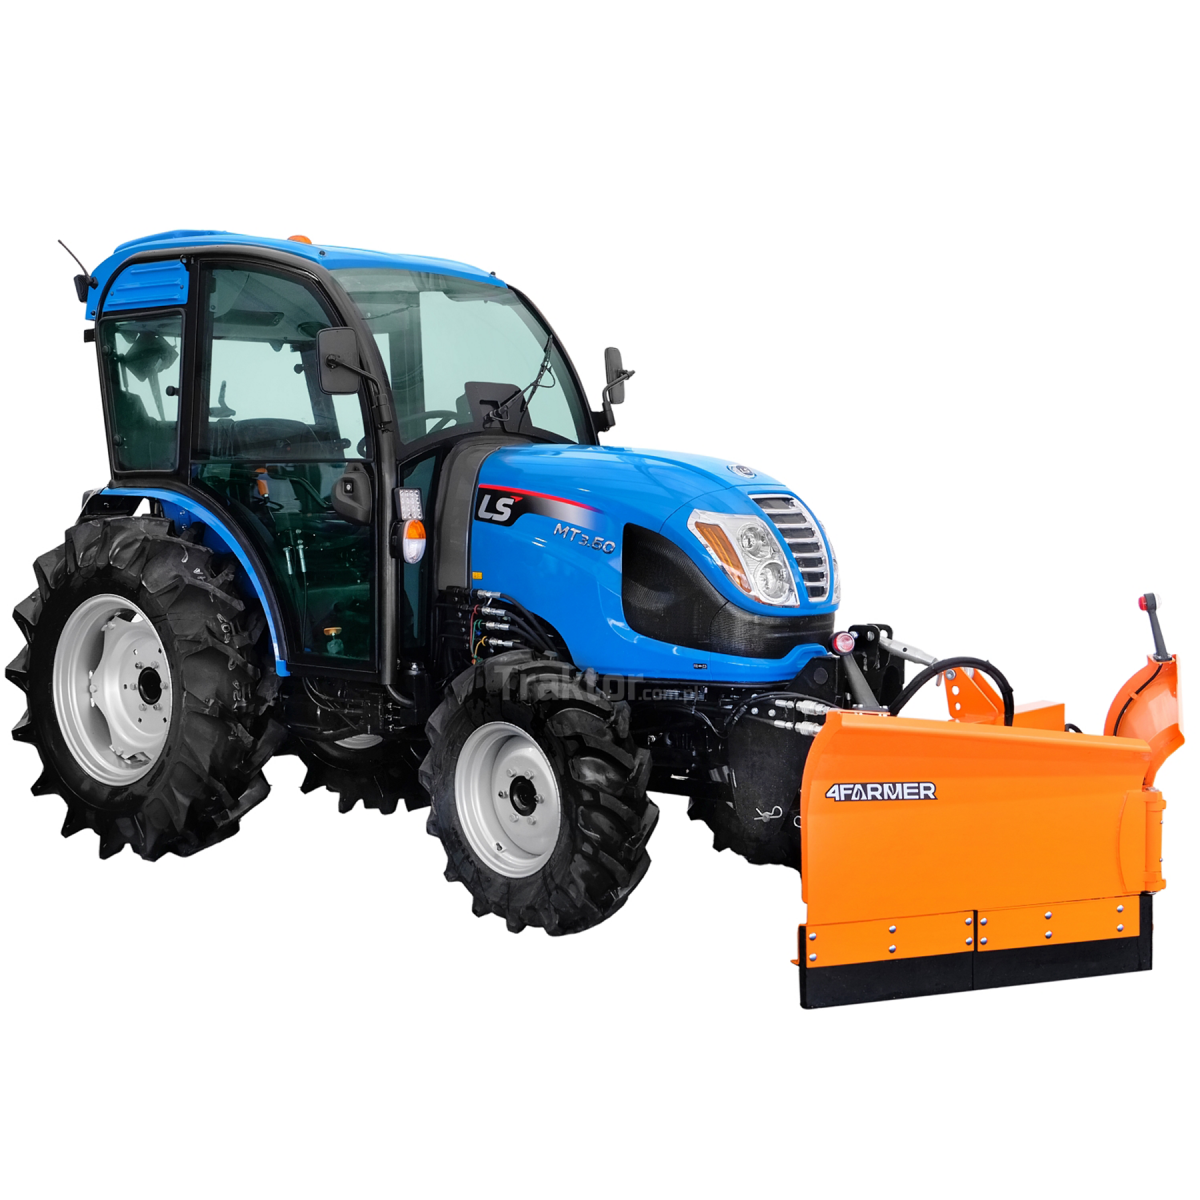 LS Traktor MT3.60 MEC 4x4 - 57 HP / KABINA s klimatizací + sněhový pluh Vario arrow 180 cm, hydraulický (TUZ) 4FARMER